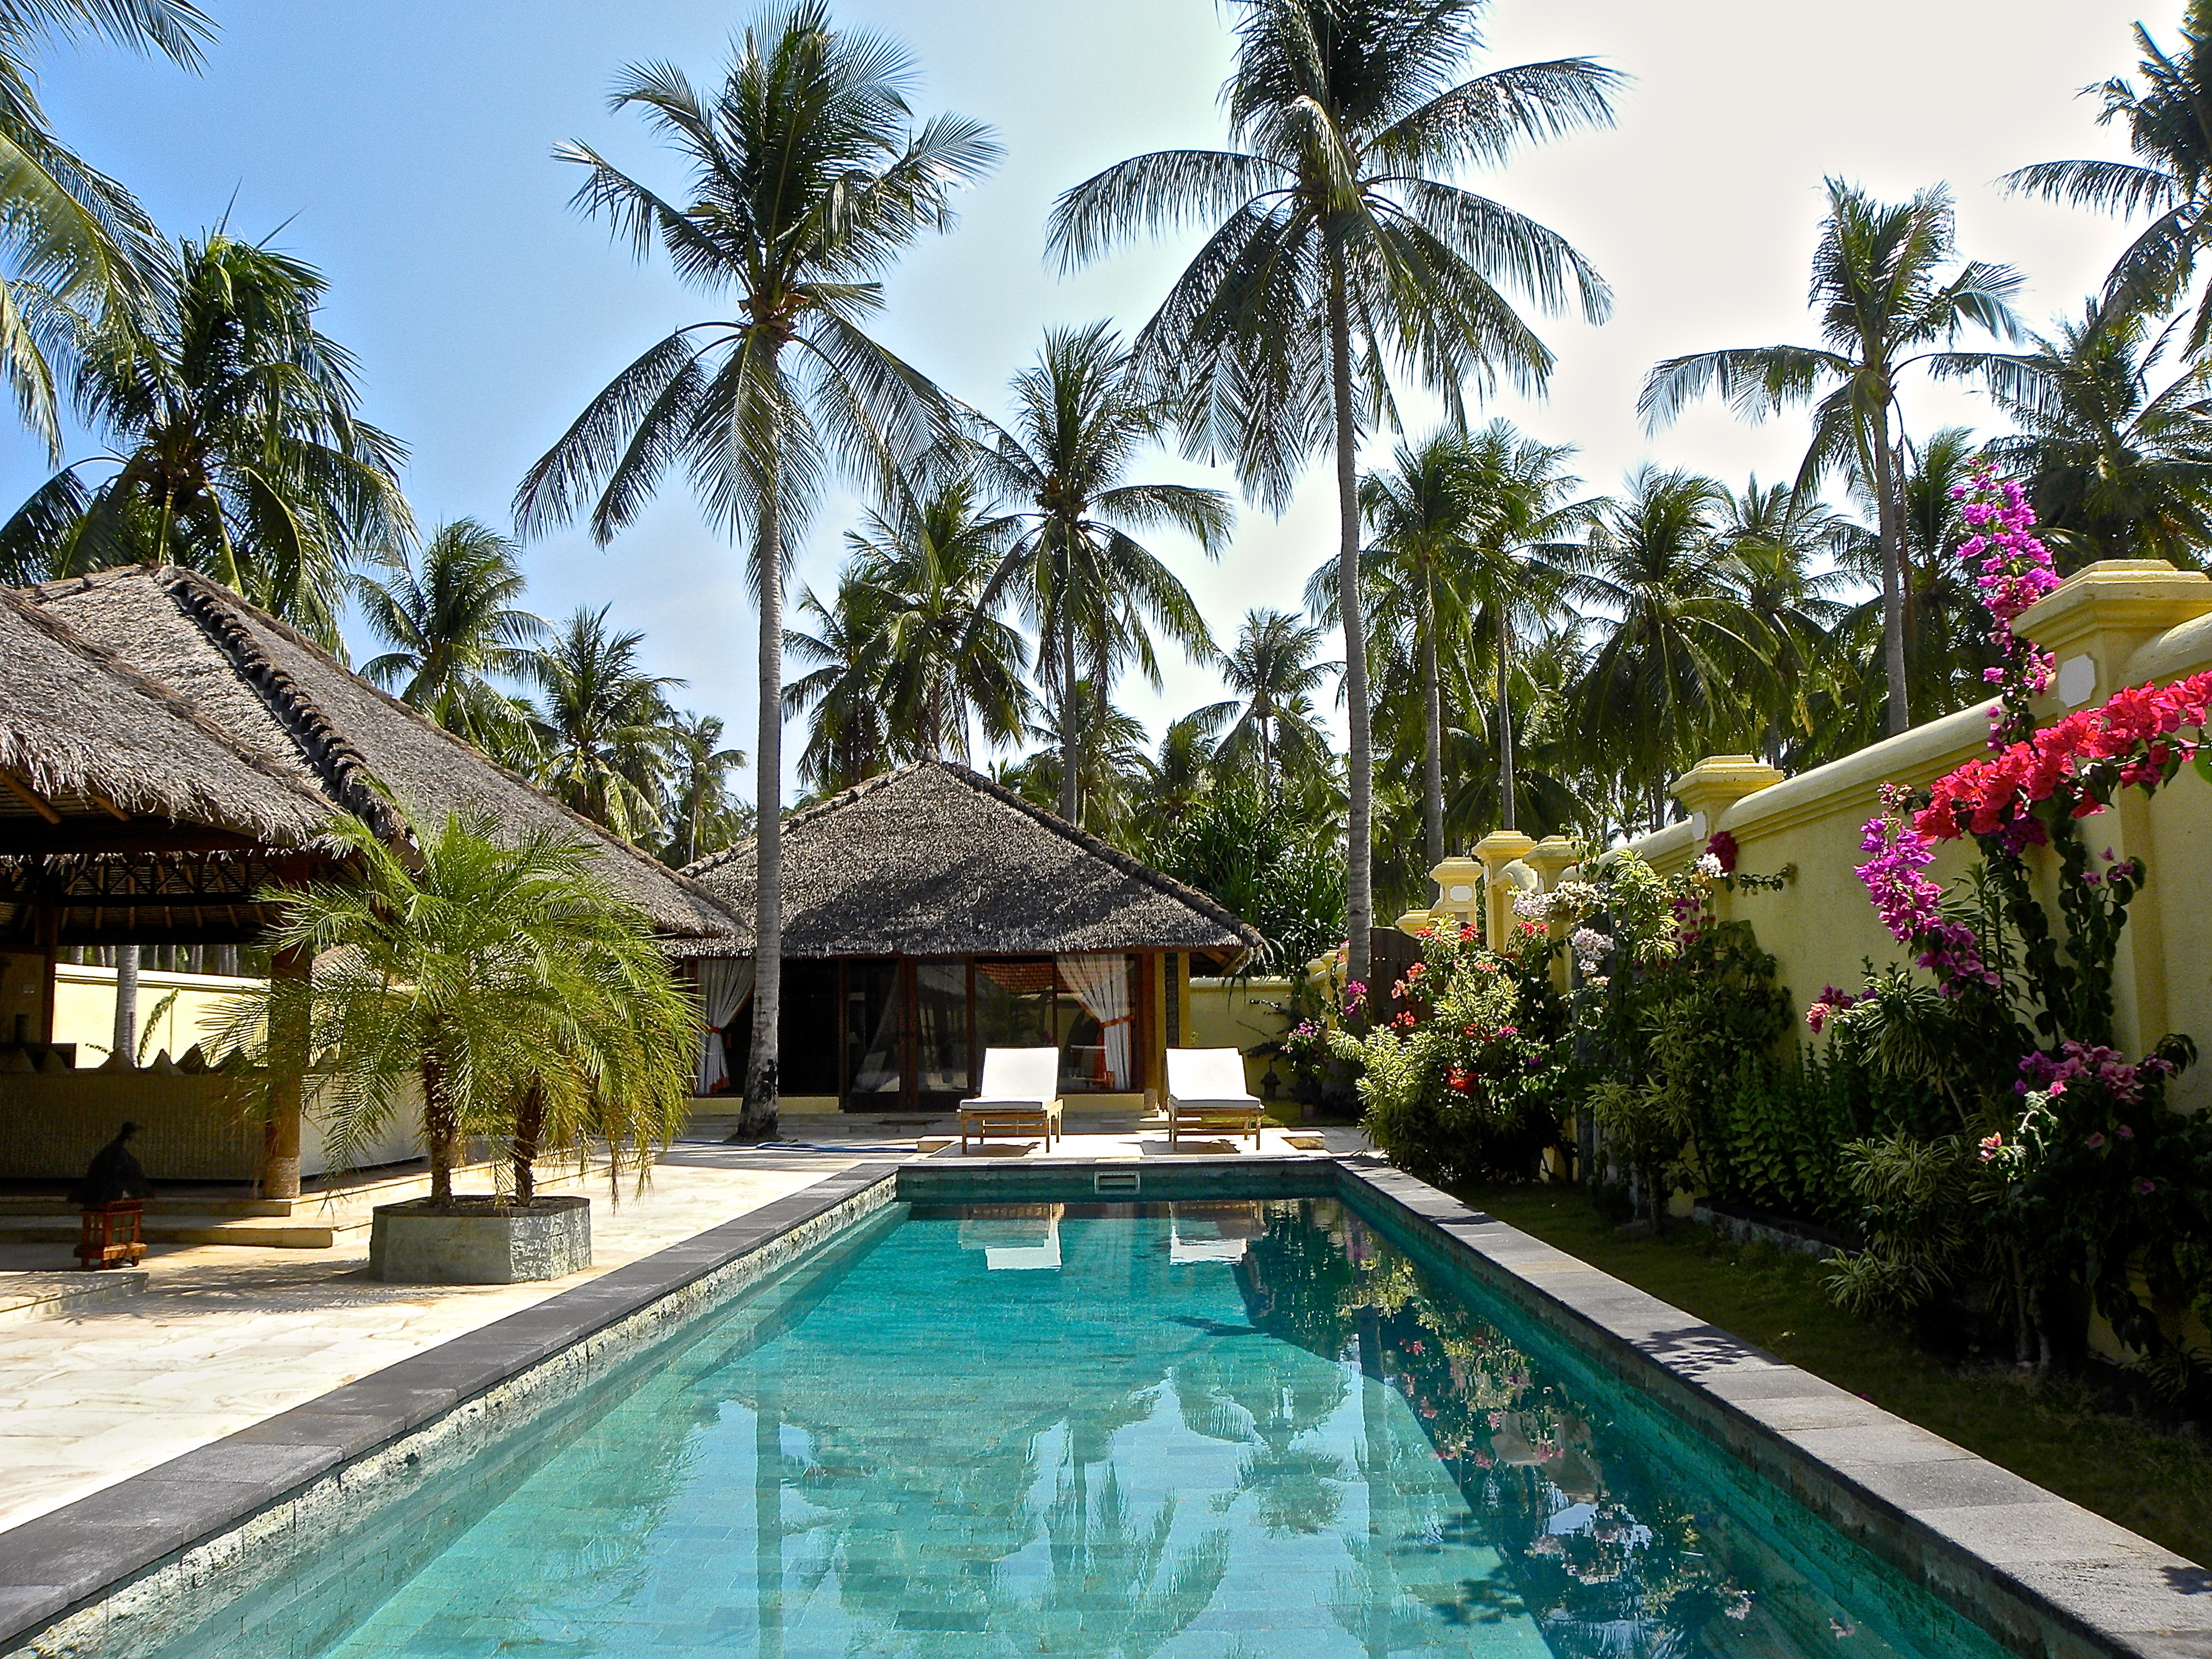 Swimming Pool in Indonesia